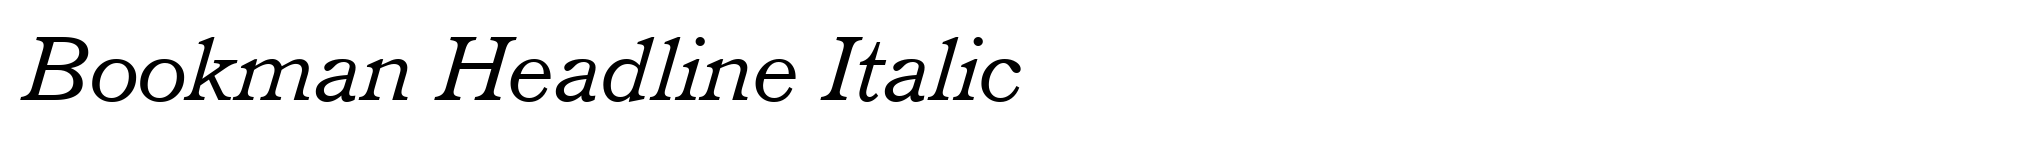 Bookman Headline Italic image